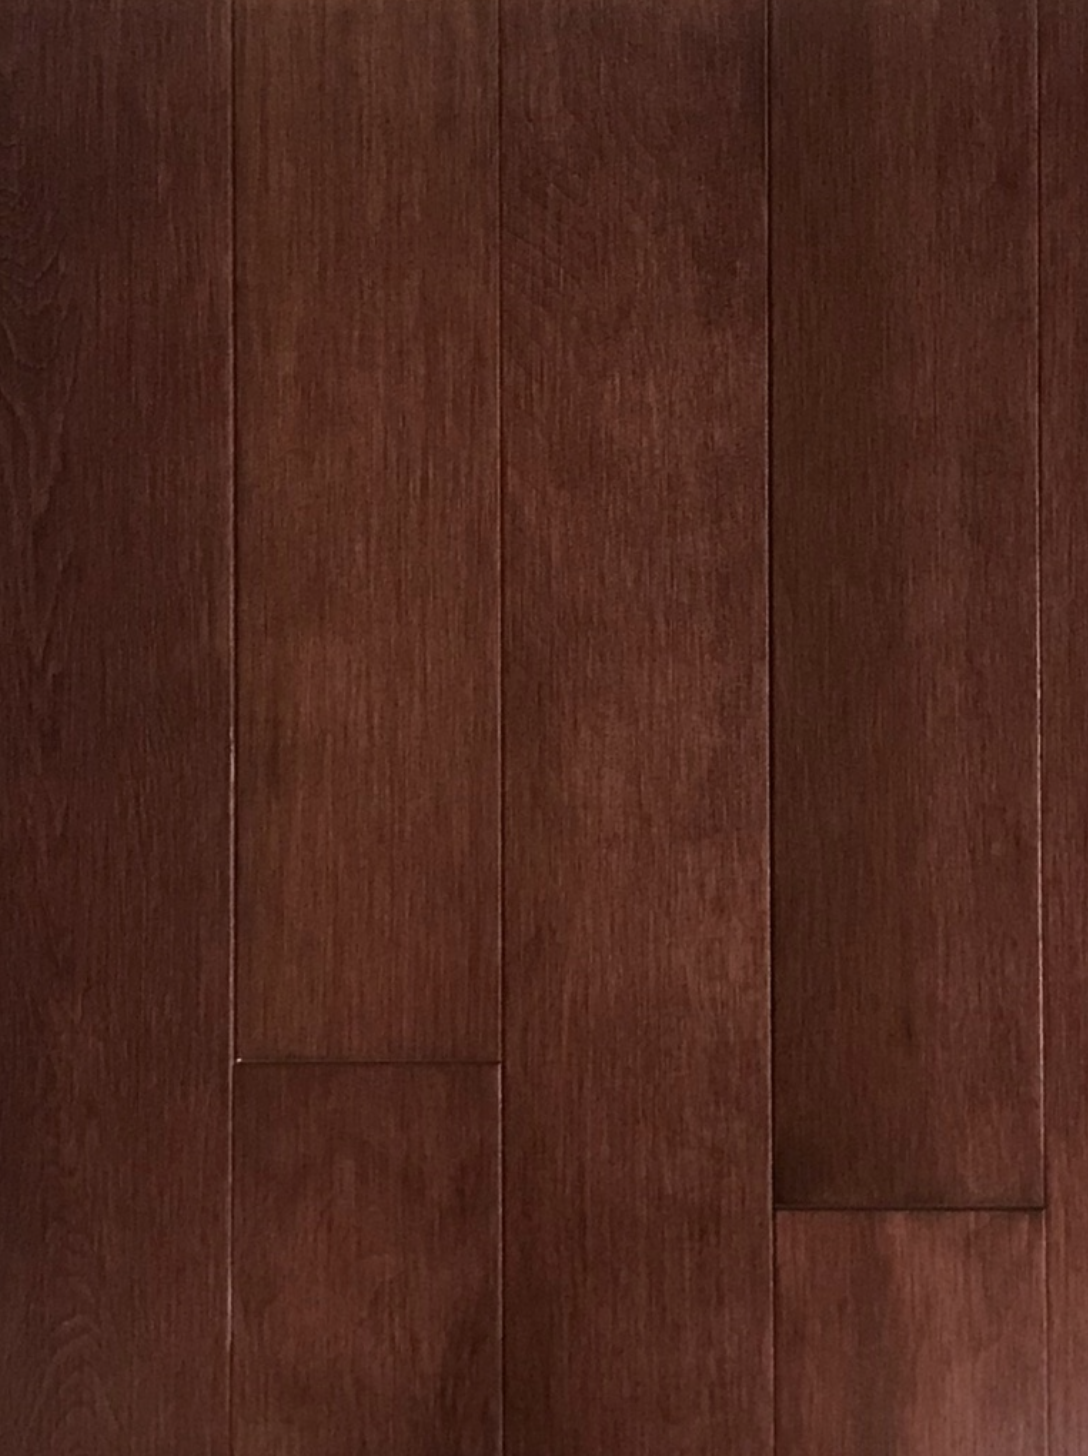 cayenne hardwood flooring